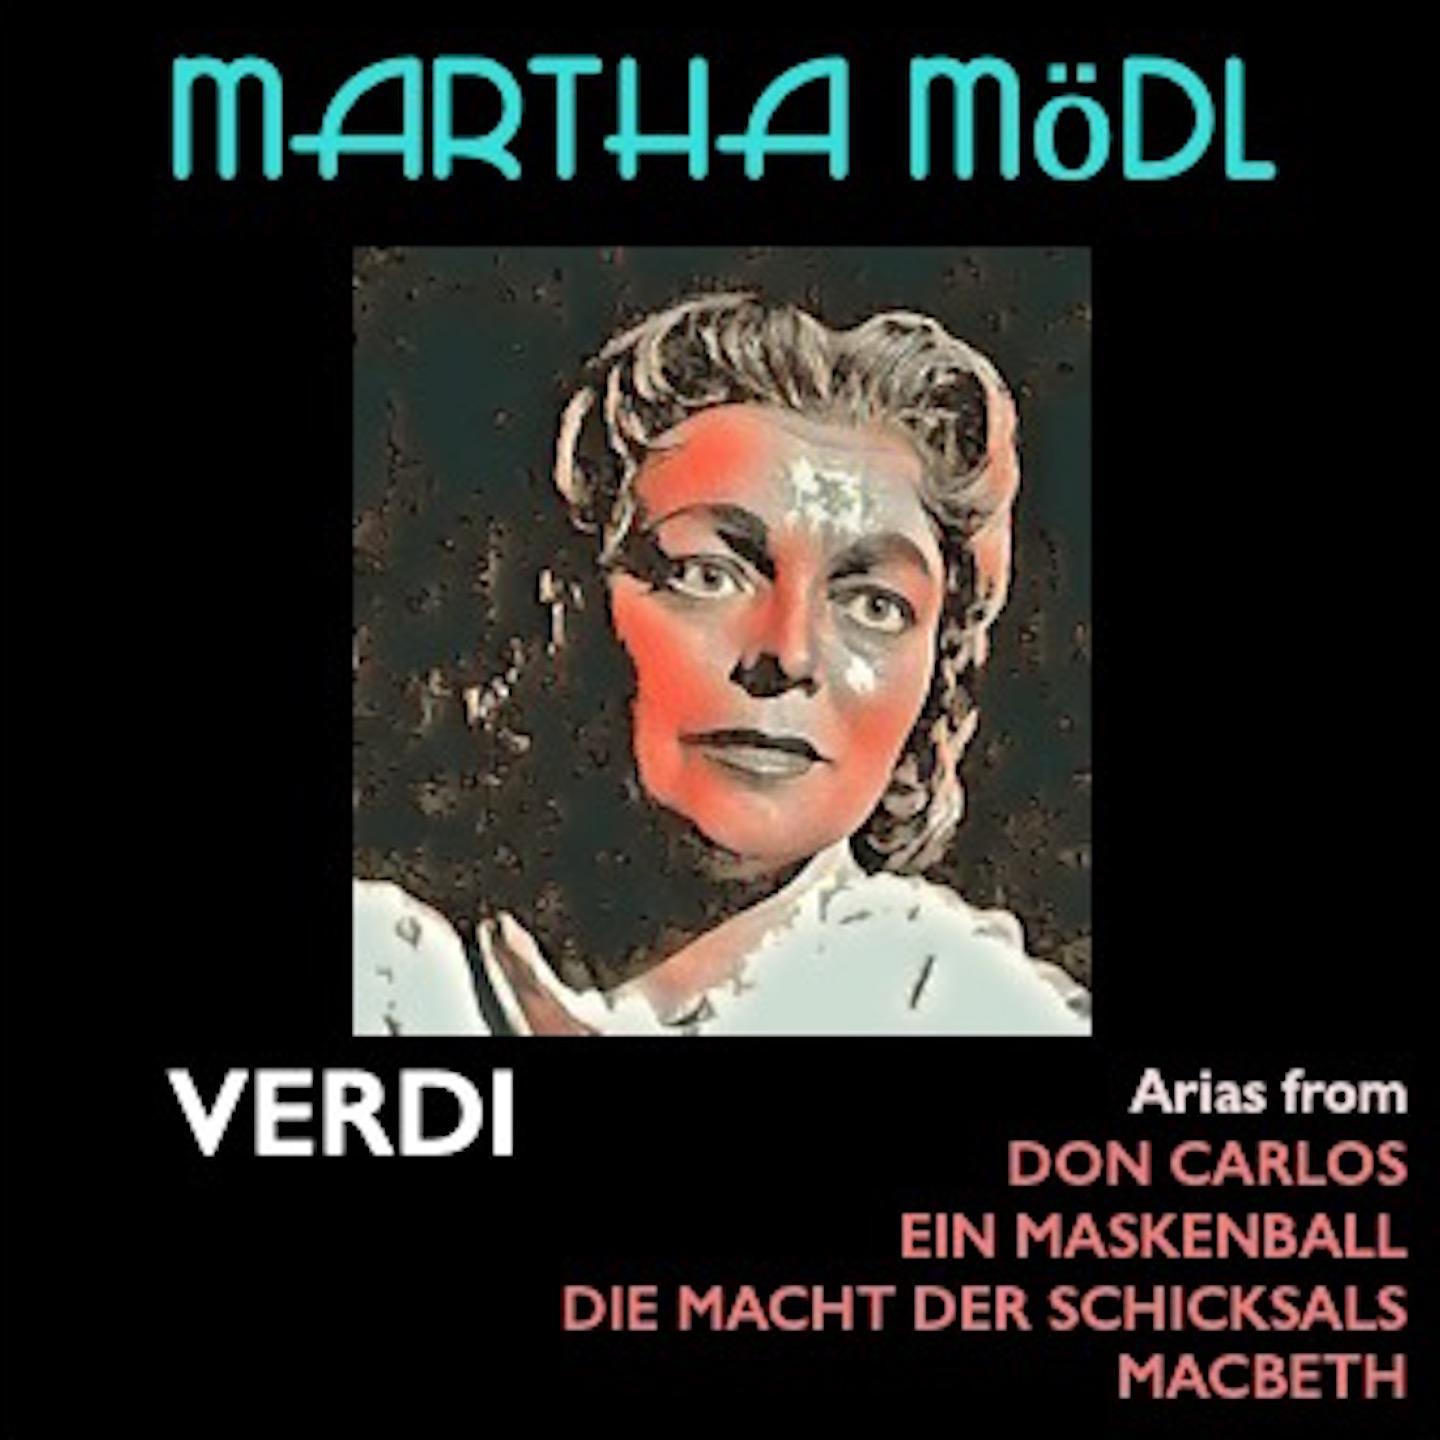 Martha Mödl - Ein Maskenball, IGV 32: